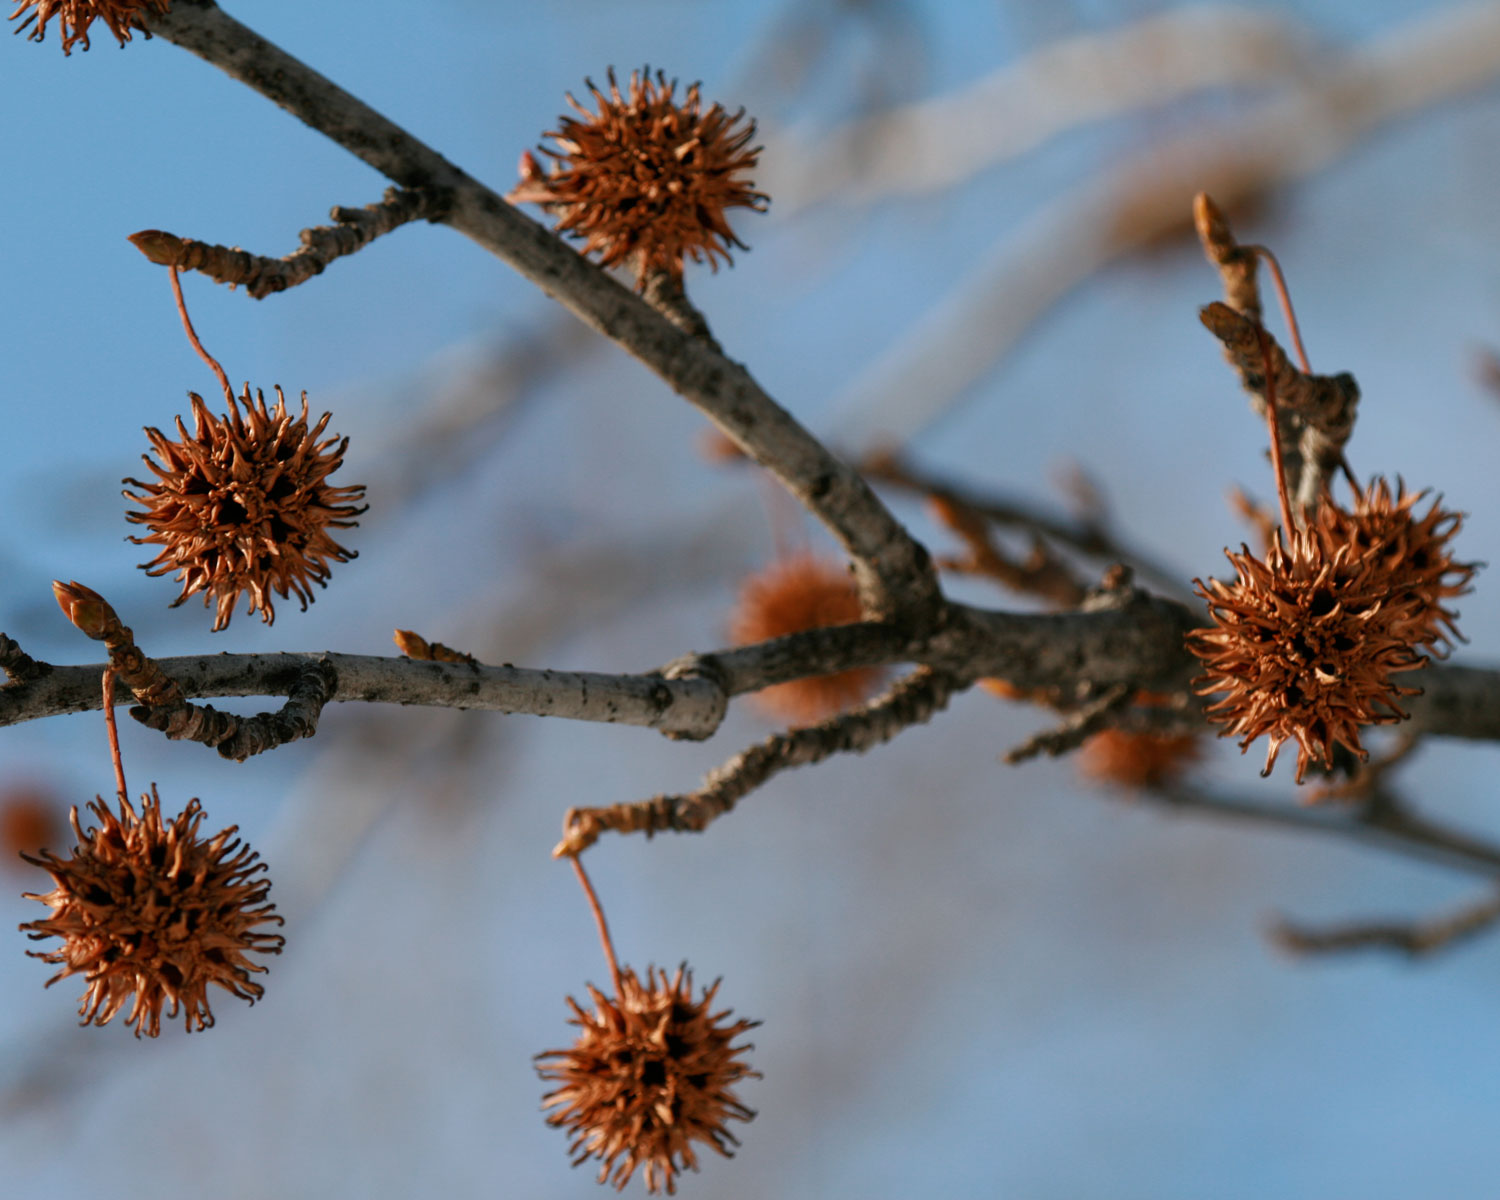  Sweetgum balls  (via Flickr - Dan Murtha)  